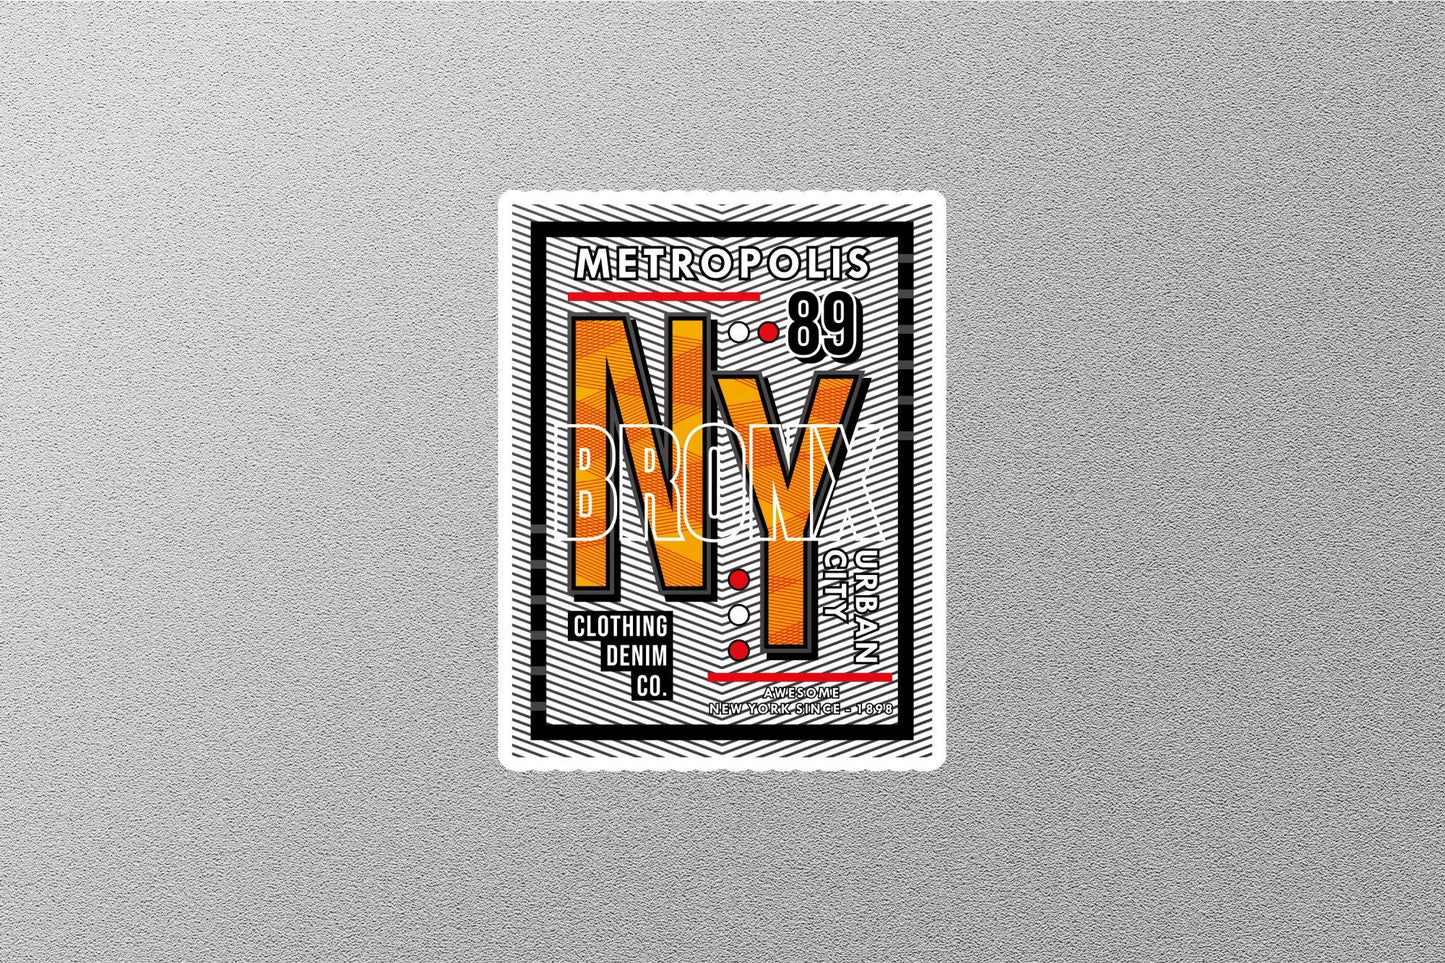 New York Urban City Sticker